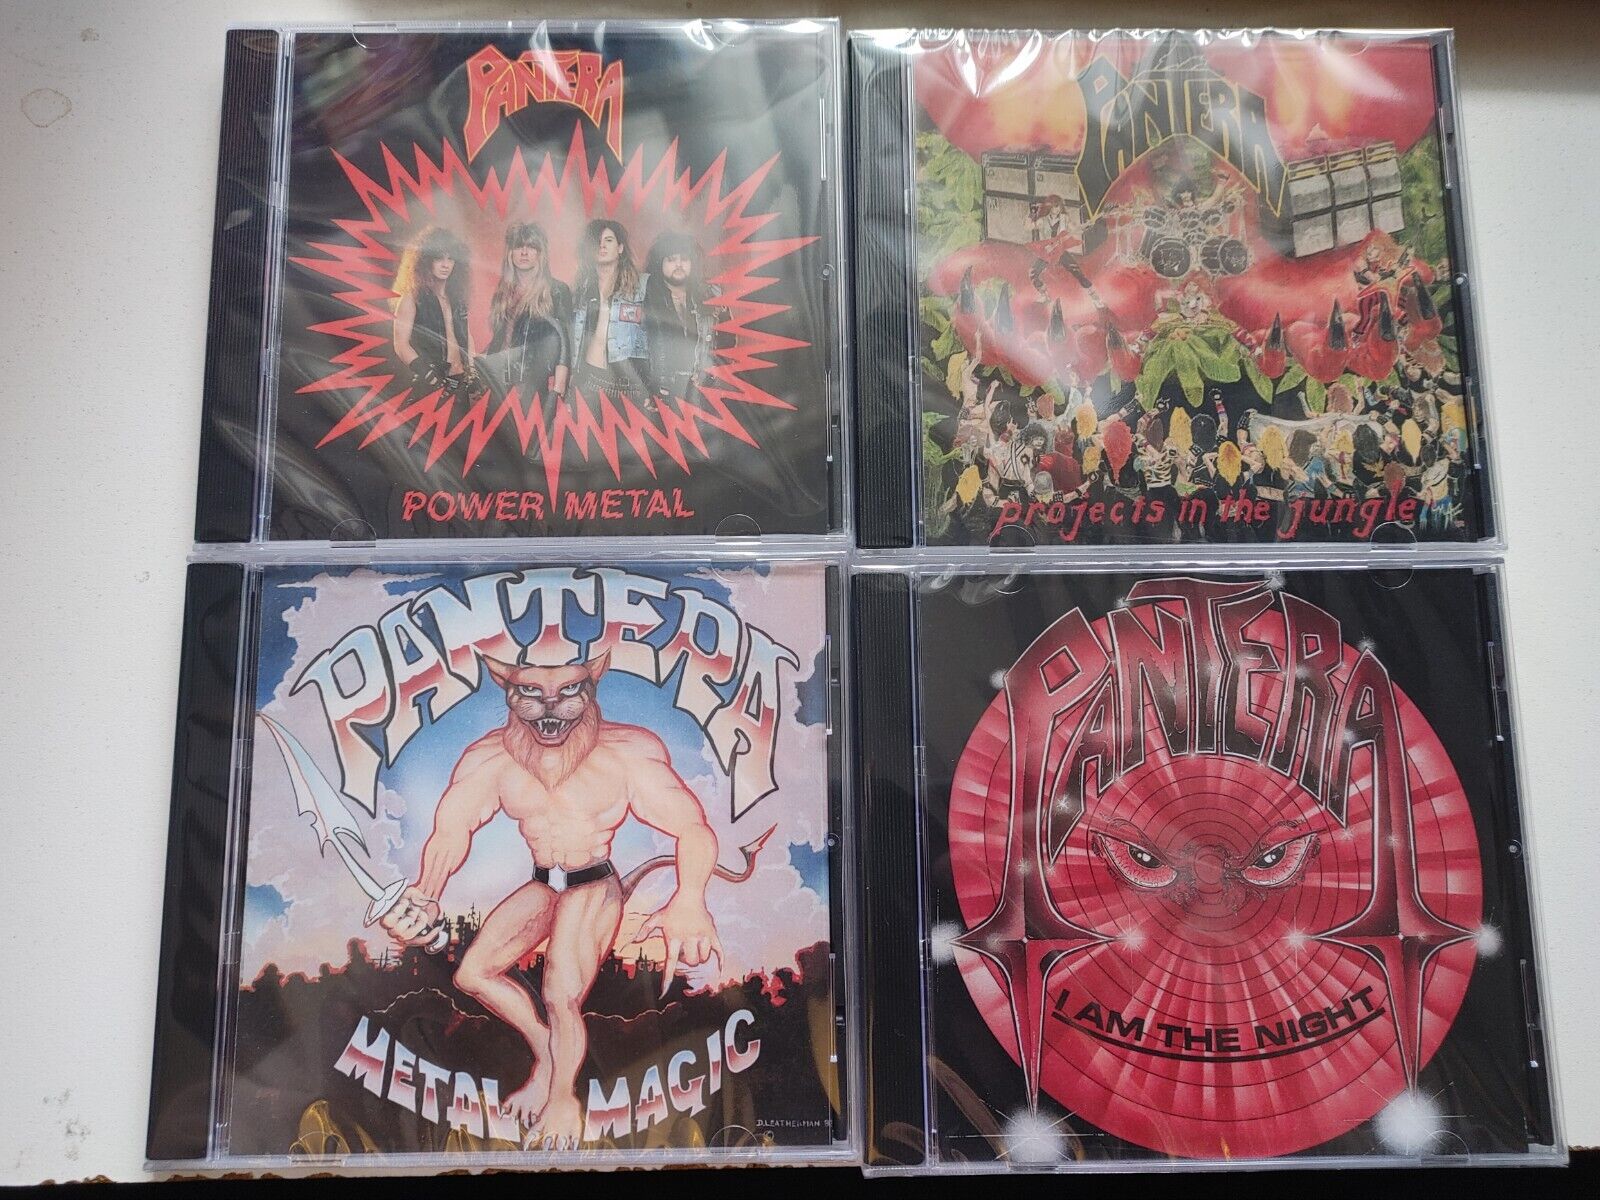 Pantera - 4CD - Metal Magic - Projects Jungle -  I Am The Night - Power Metal